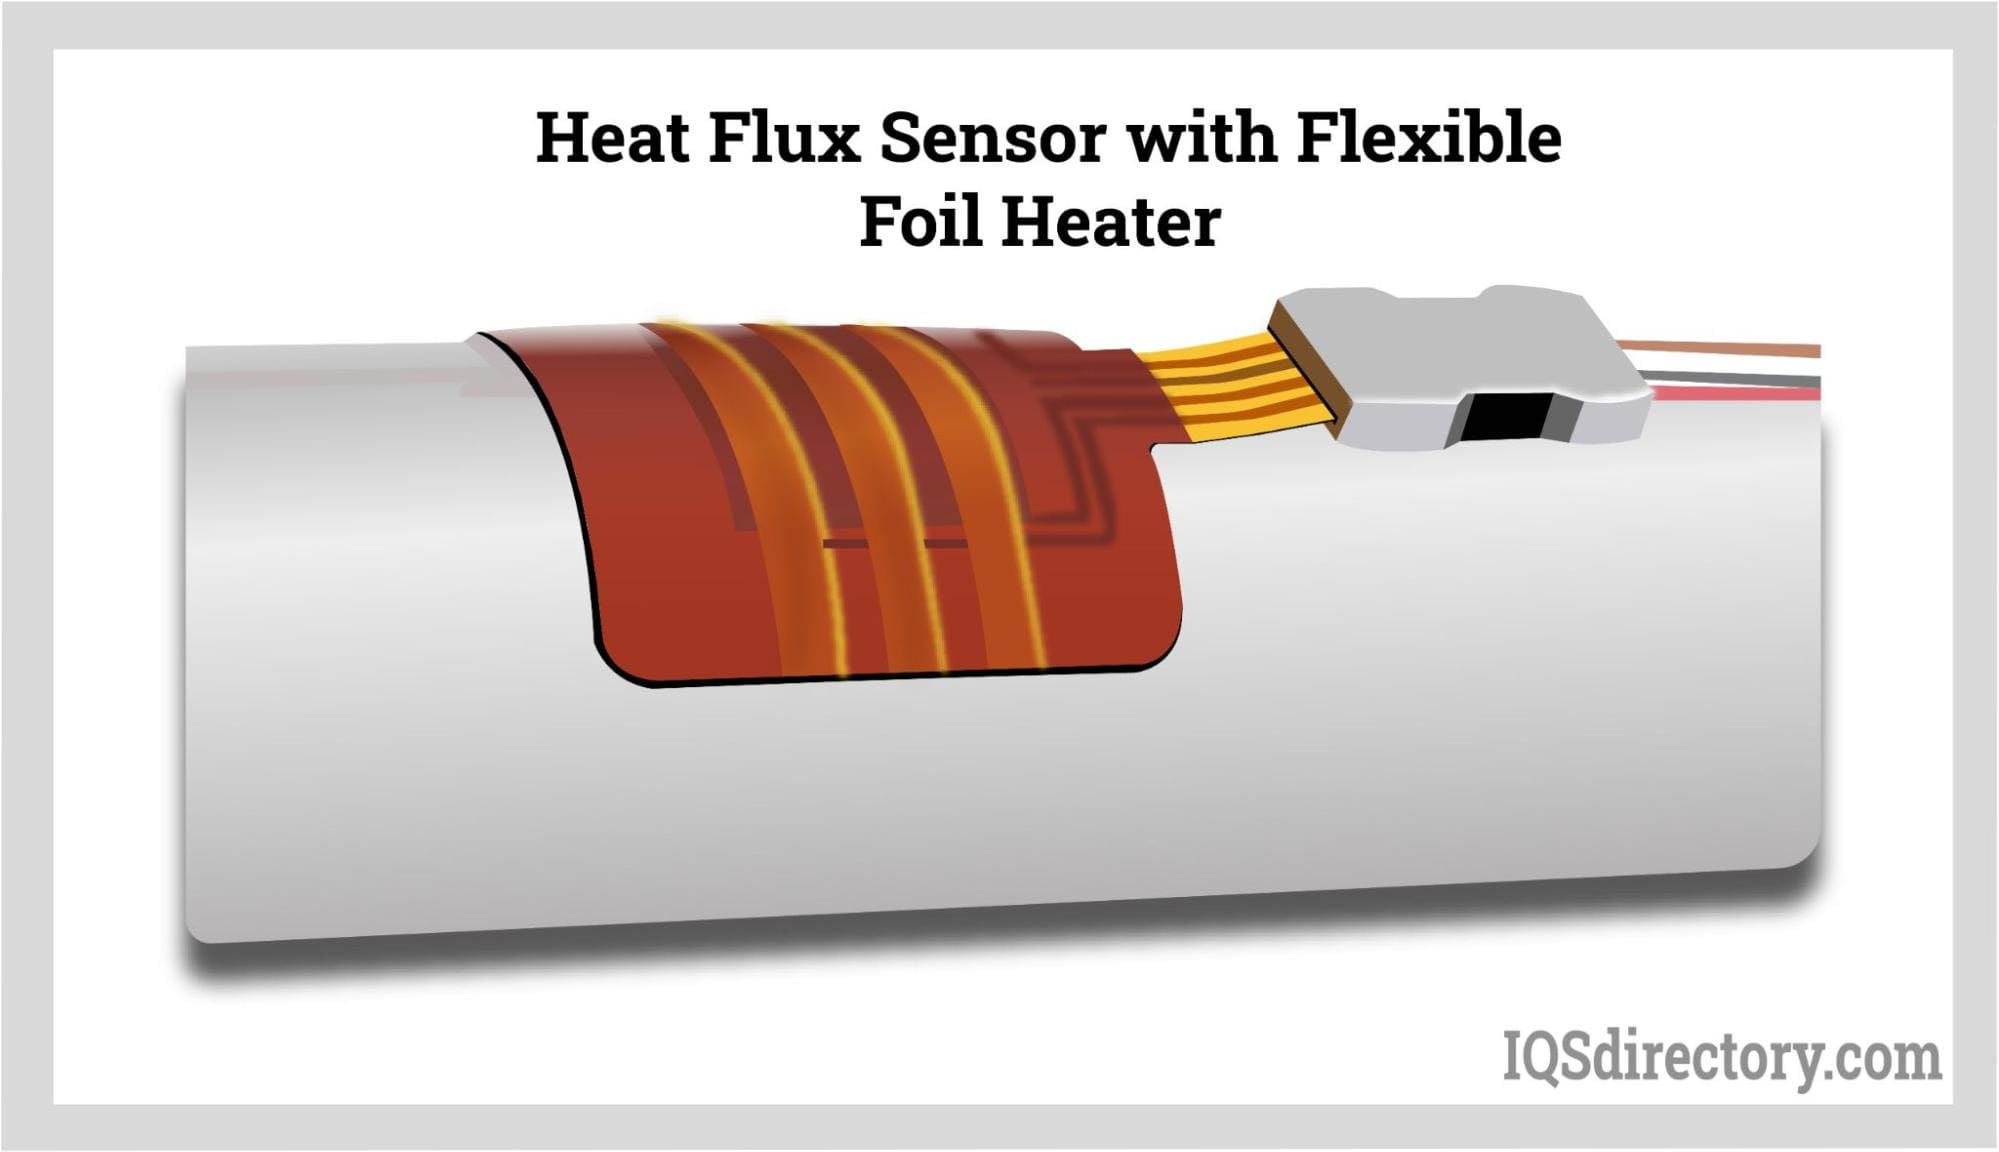 Heat Flux Sensor with Flexible Foil Heater